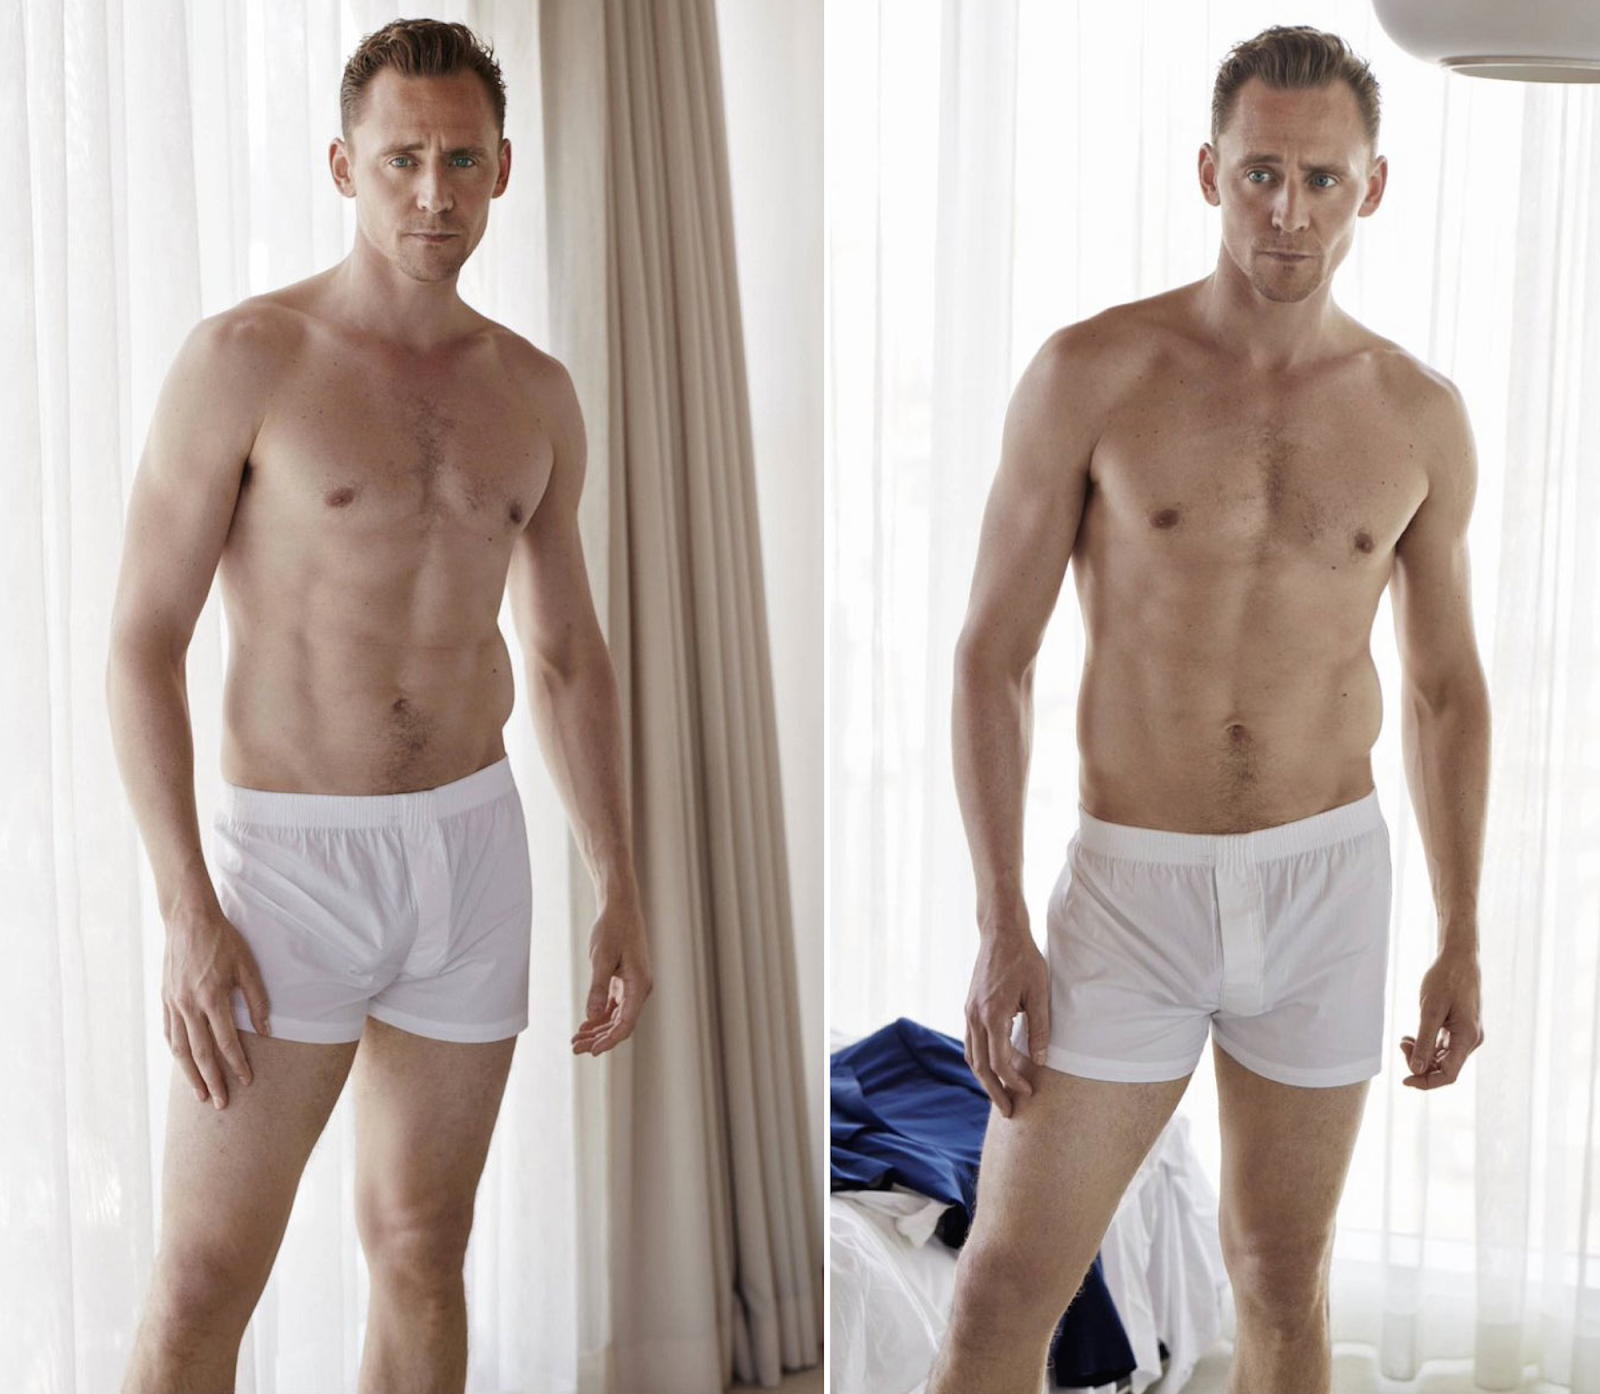 Good Morning, Tom Hiddleston.